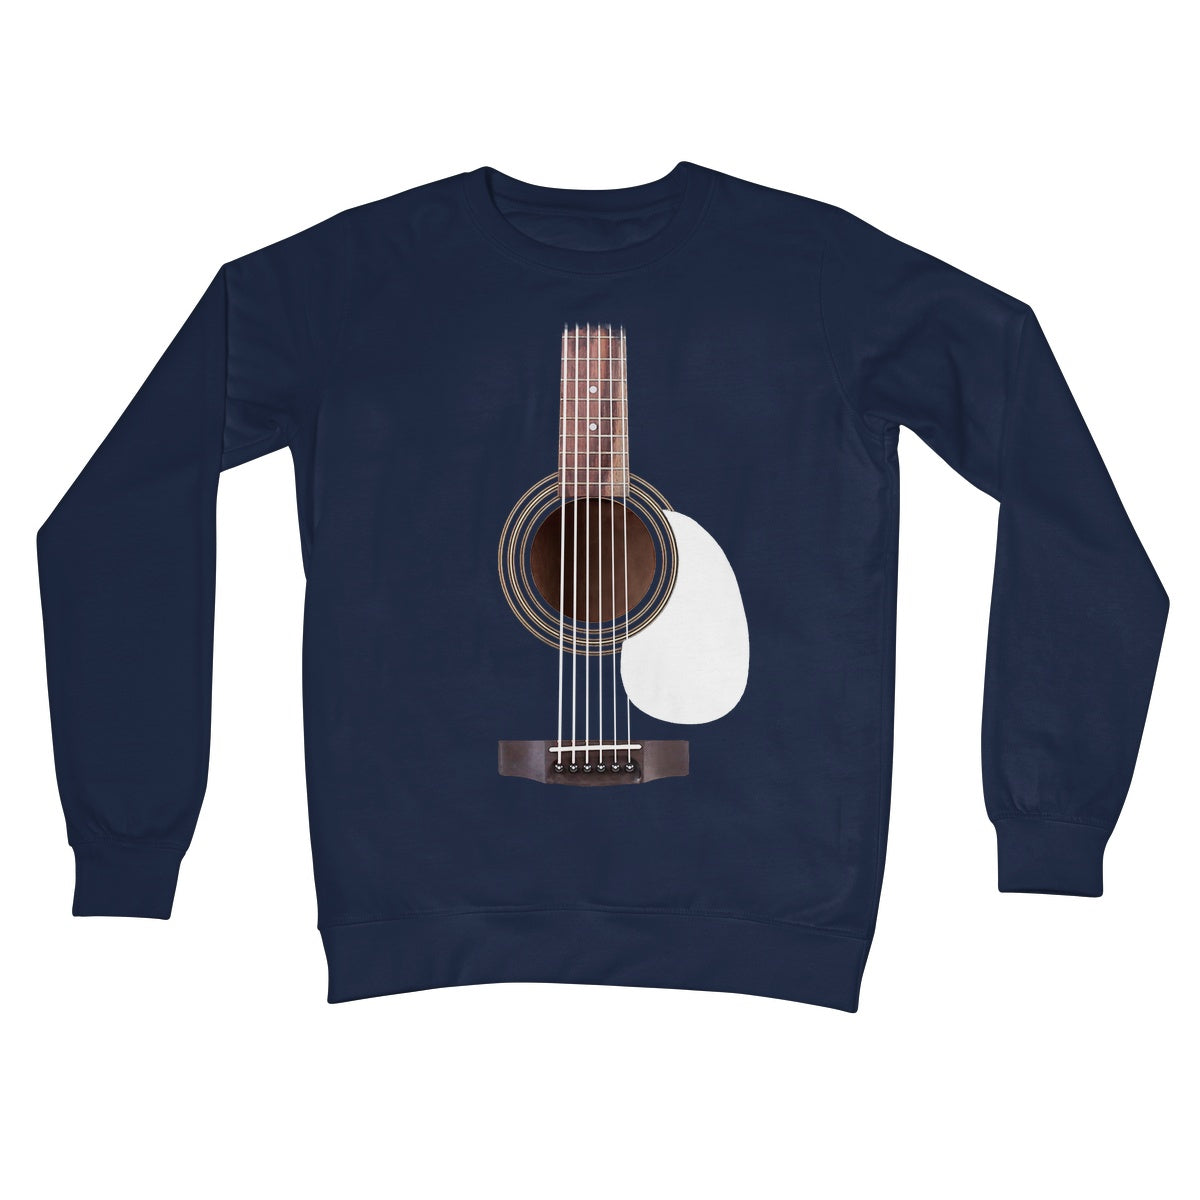 Guitar Neck and Strings Crew Neck Sweatshirt